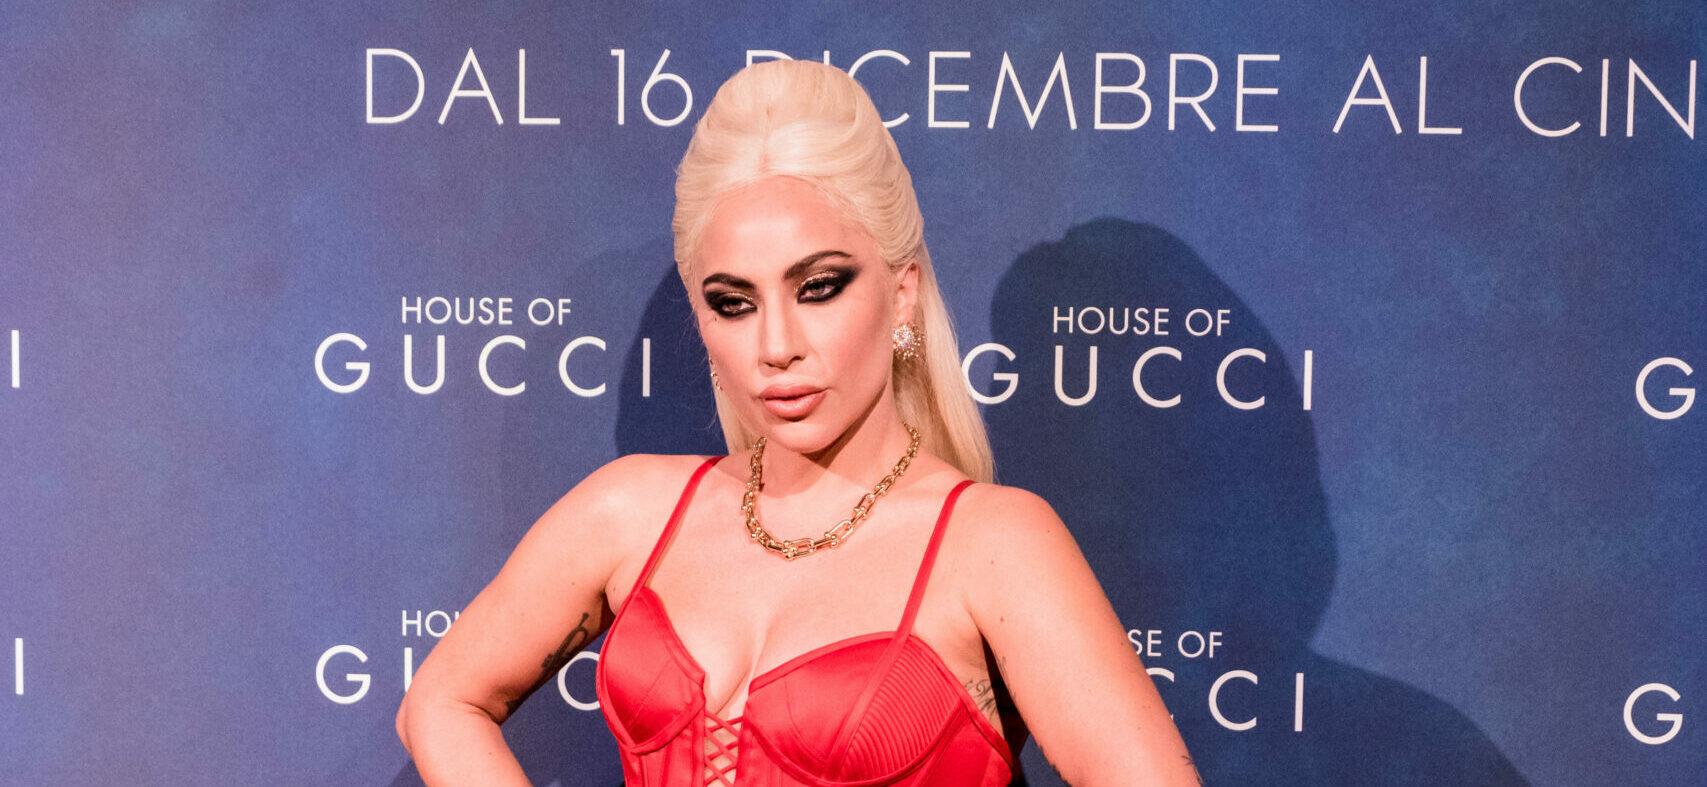 Lady Gaga at ‘House of Gucci’ Milan premiere